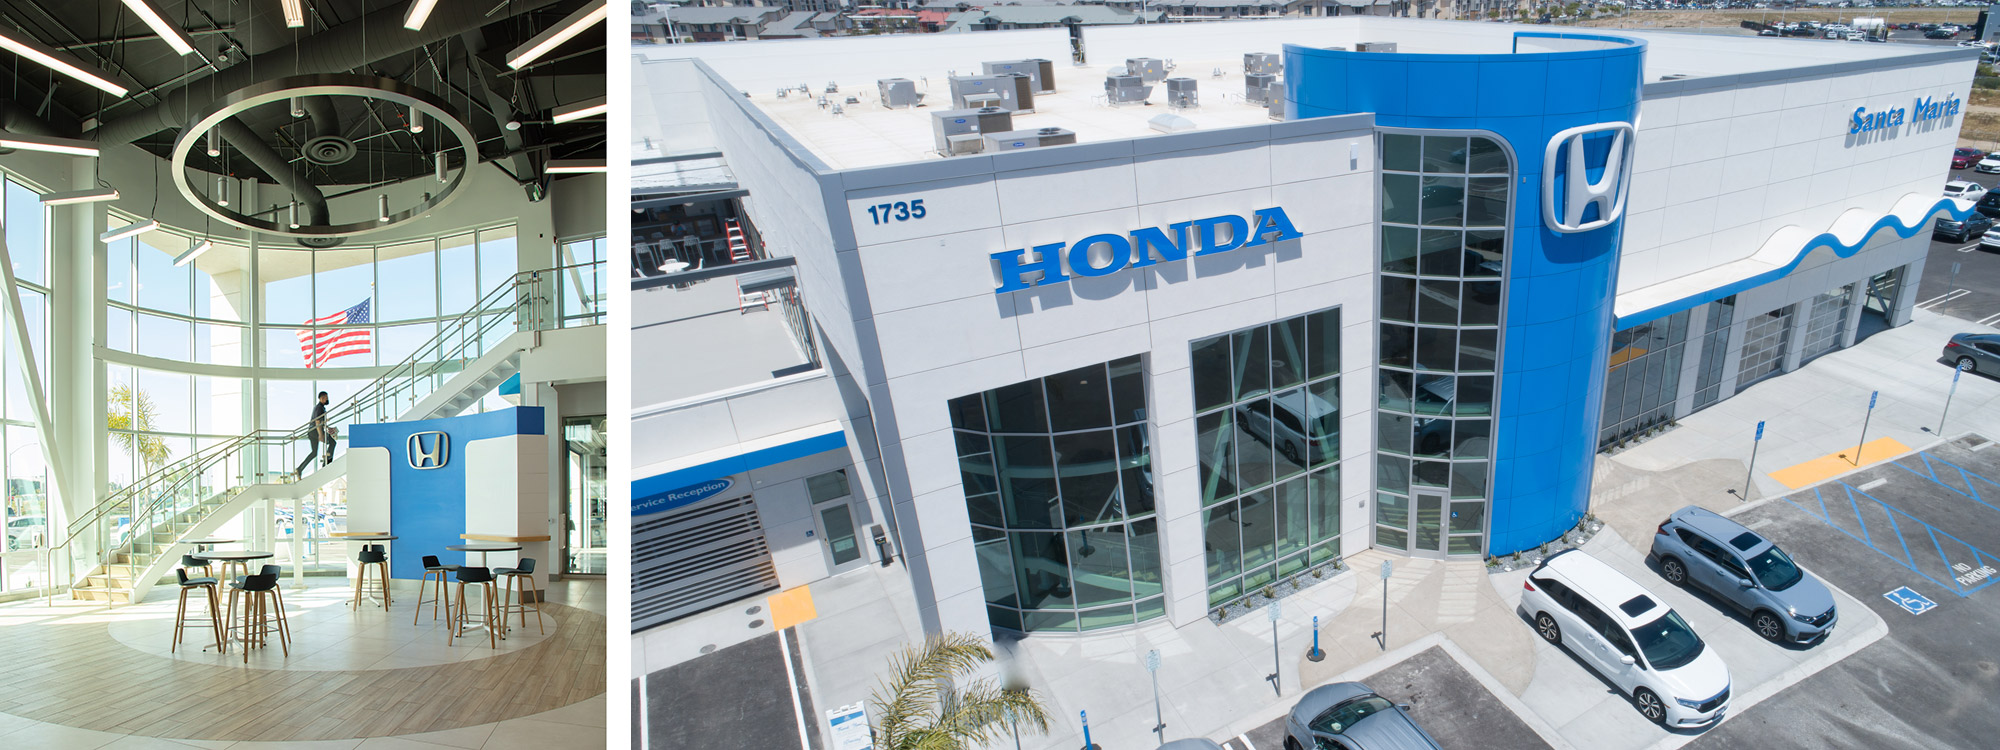 Top Quality General contractor California - Honda Dealership and Service, Santa Maria, CA Construction Firm - Santa Barbara County Builder Construction and Design - JW Design & Construction